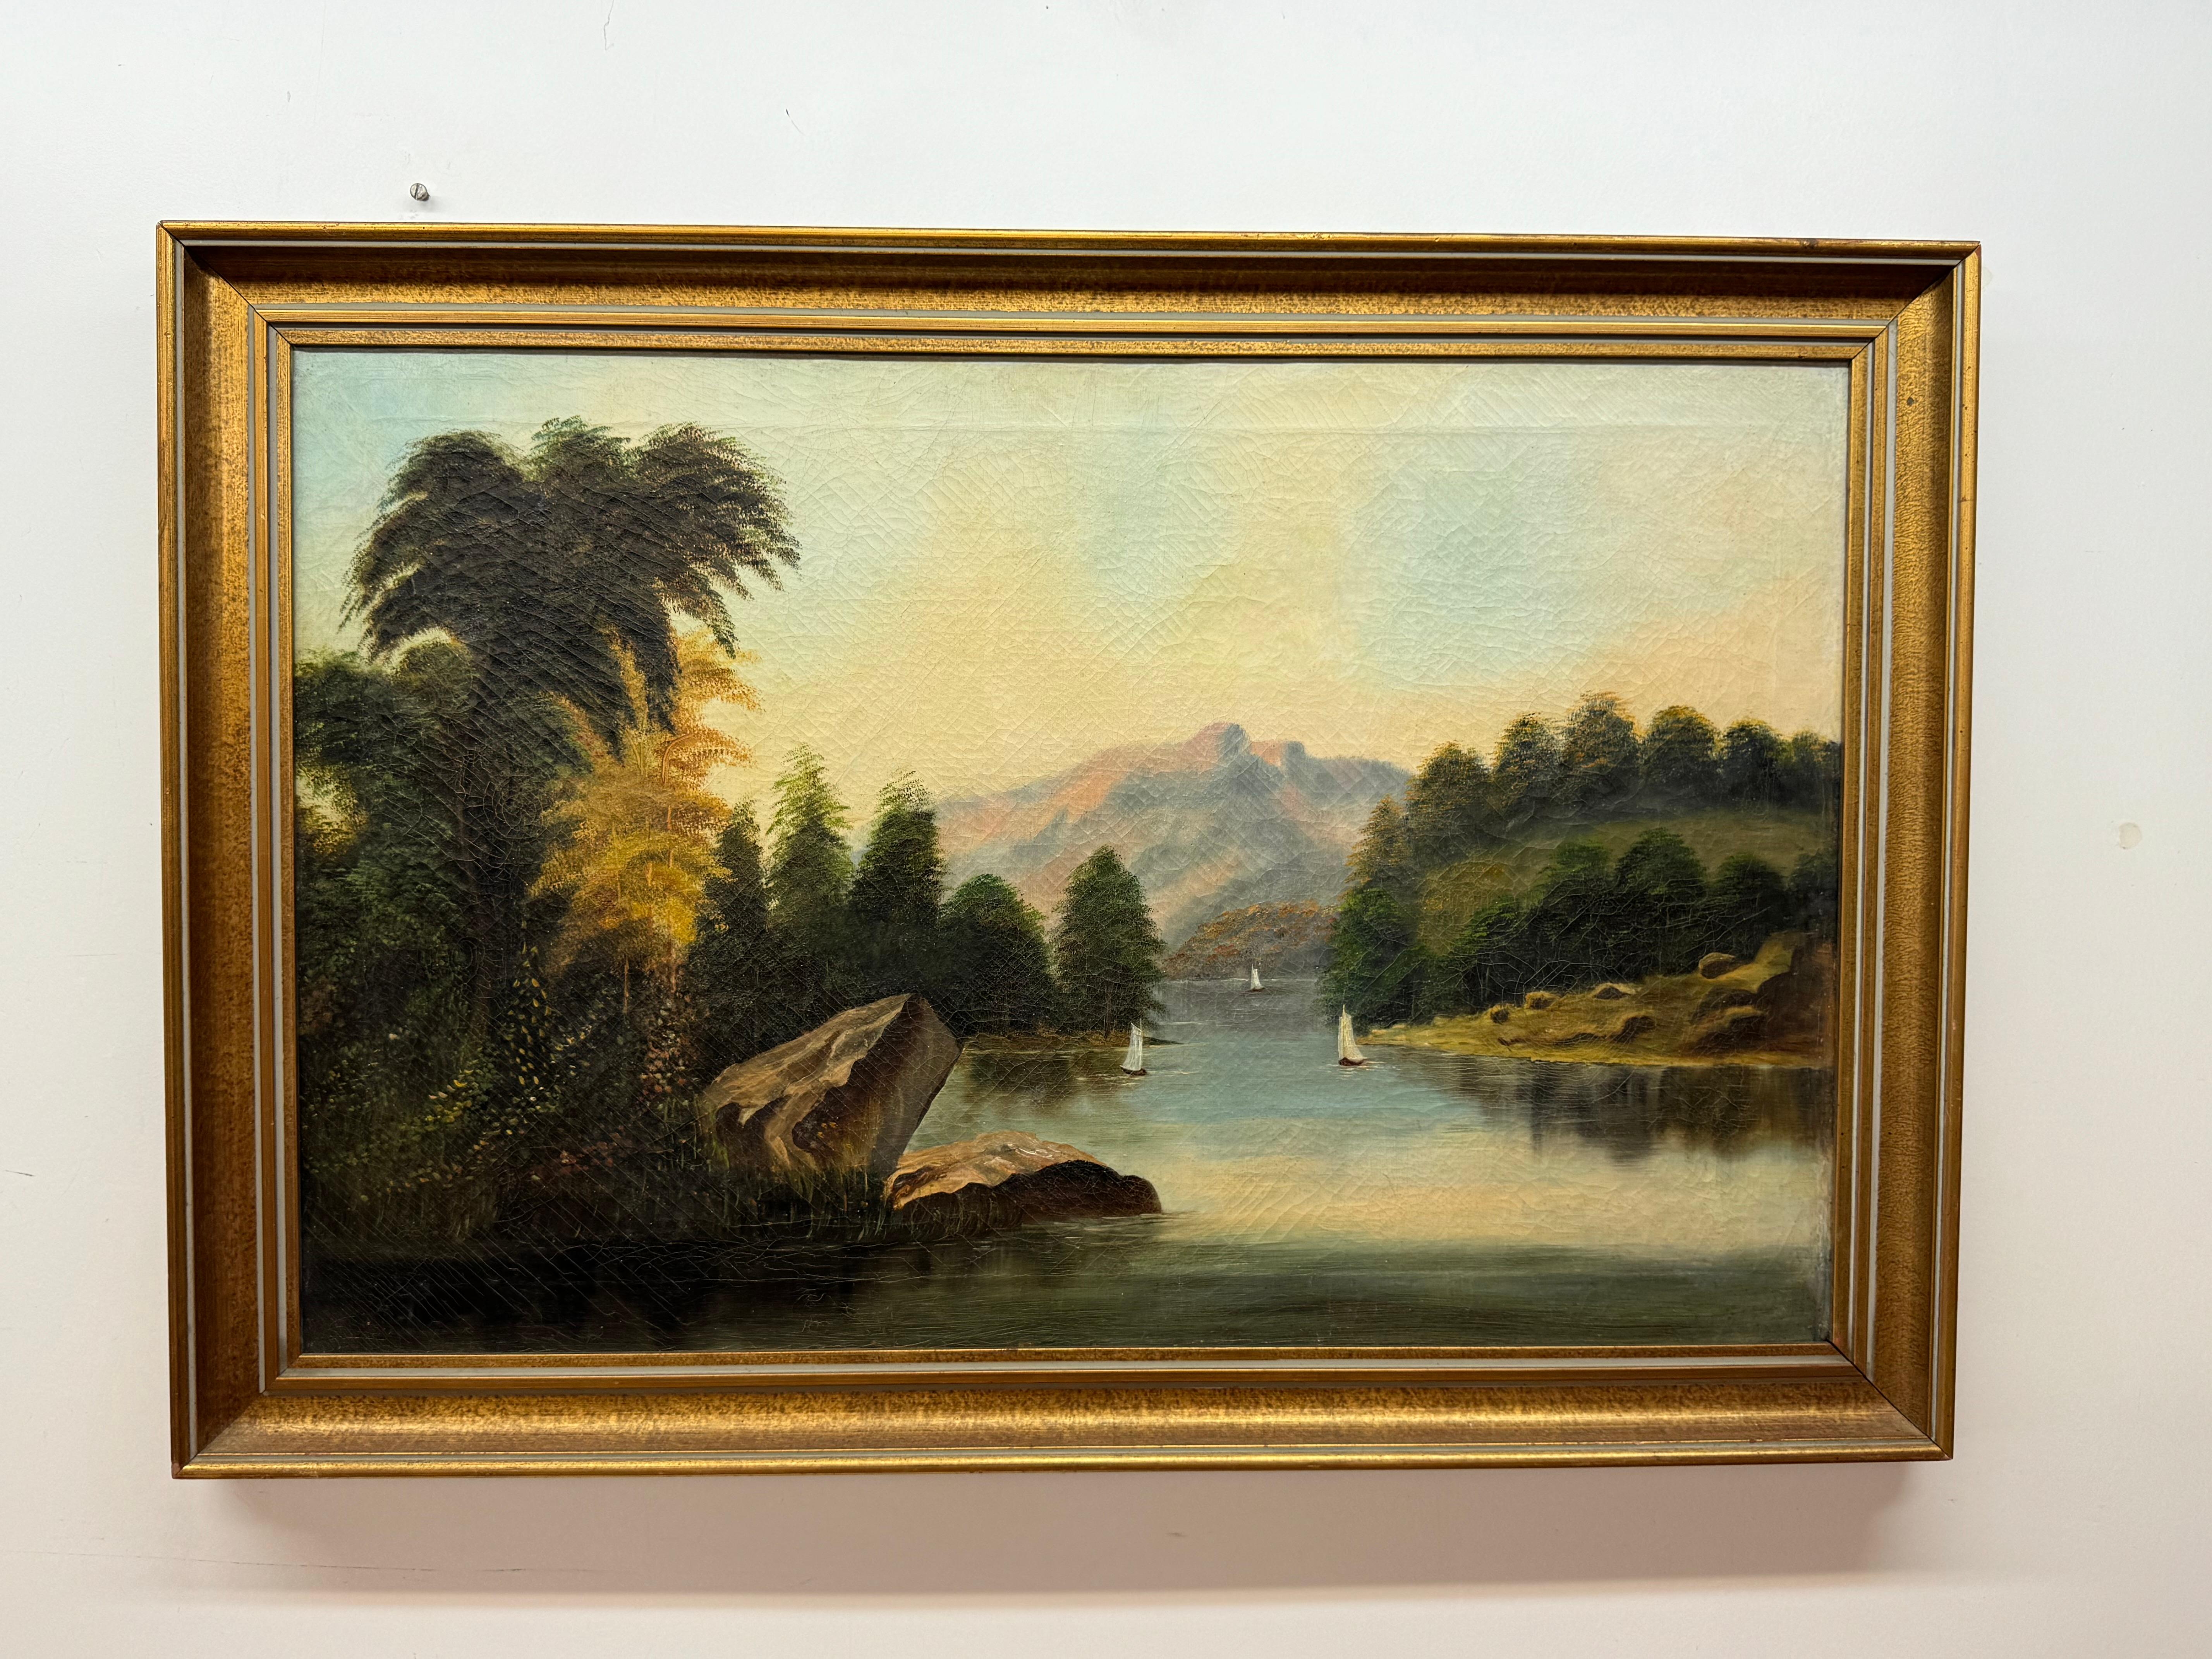 Unknown Landscape Painting - 19th century, Beautiful Hudson River Scene, Landscape, Painting